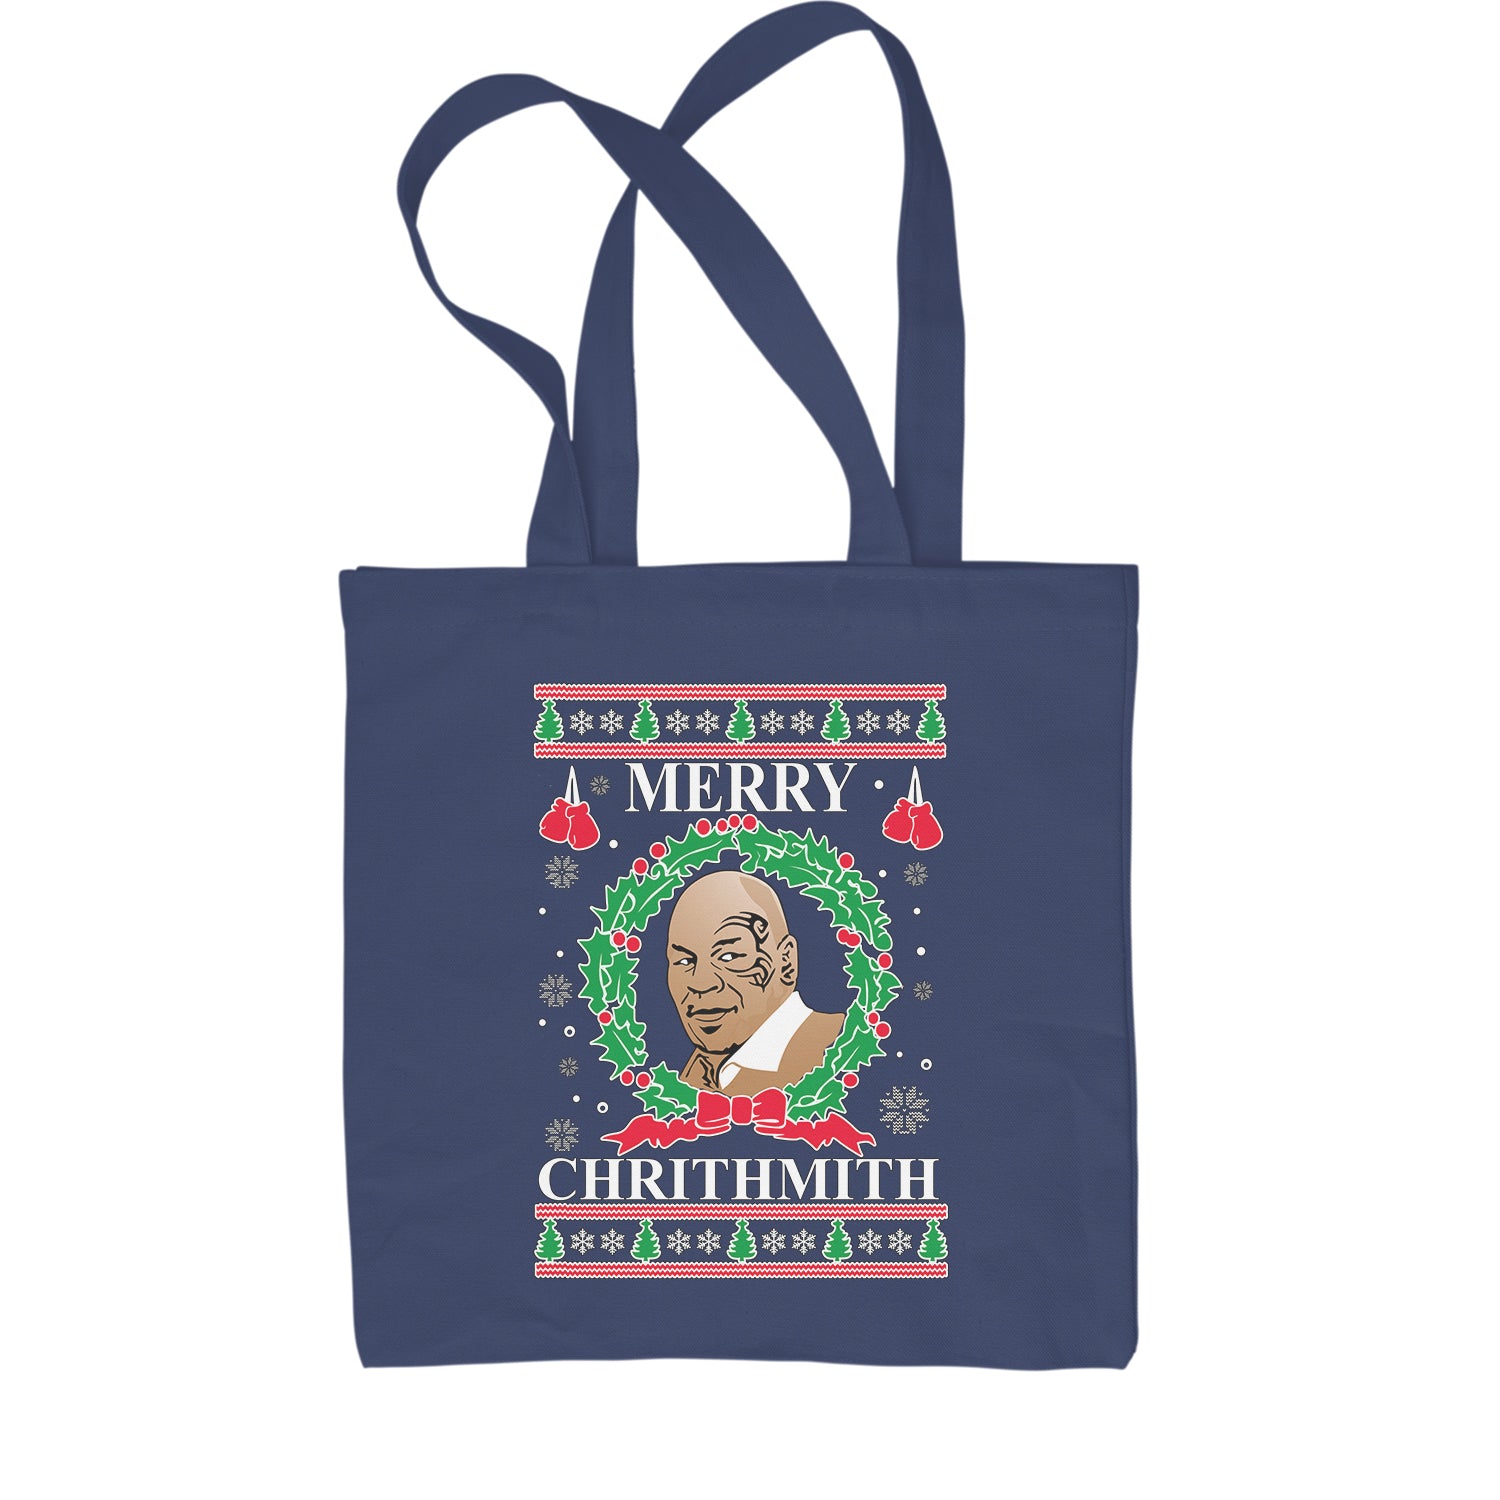 Merry Chrithmith Ugly Christmas Shopping Tote Bag